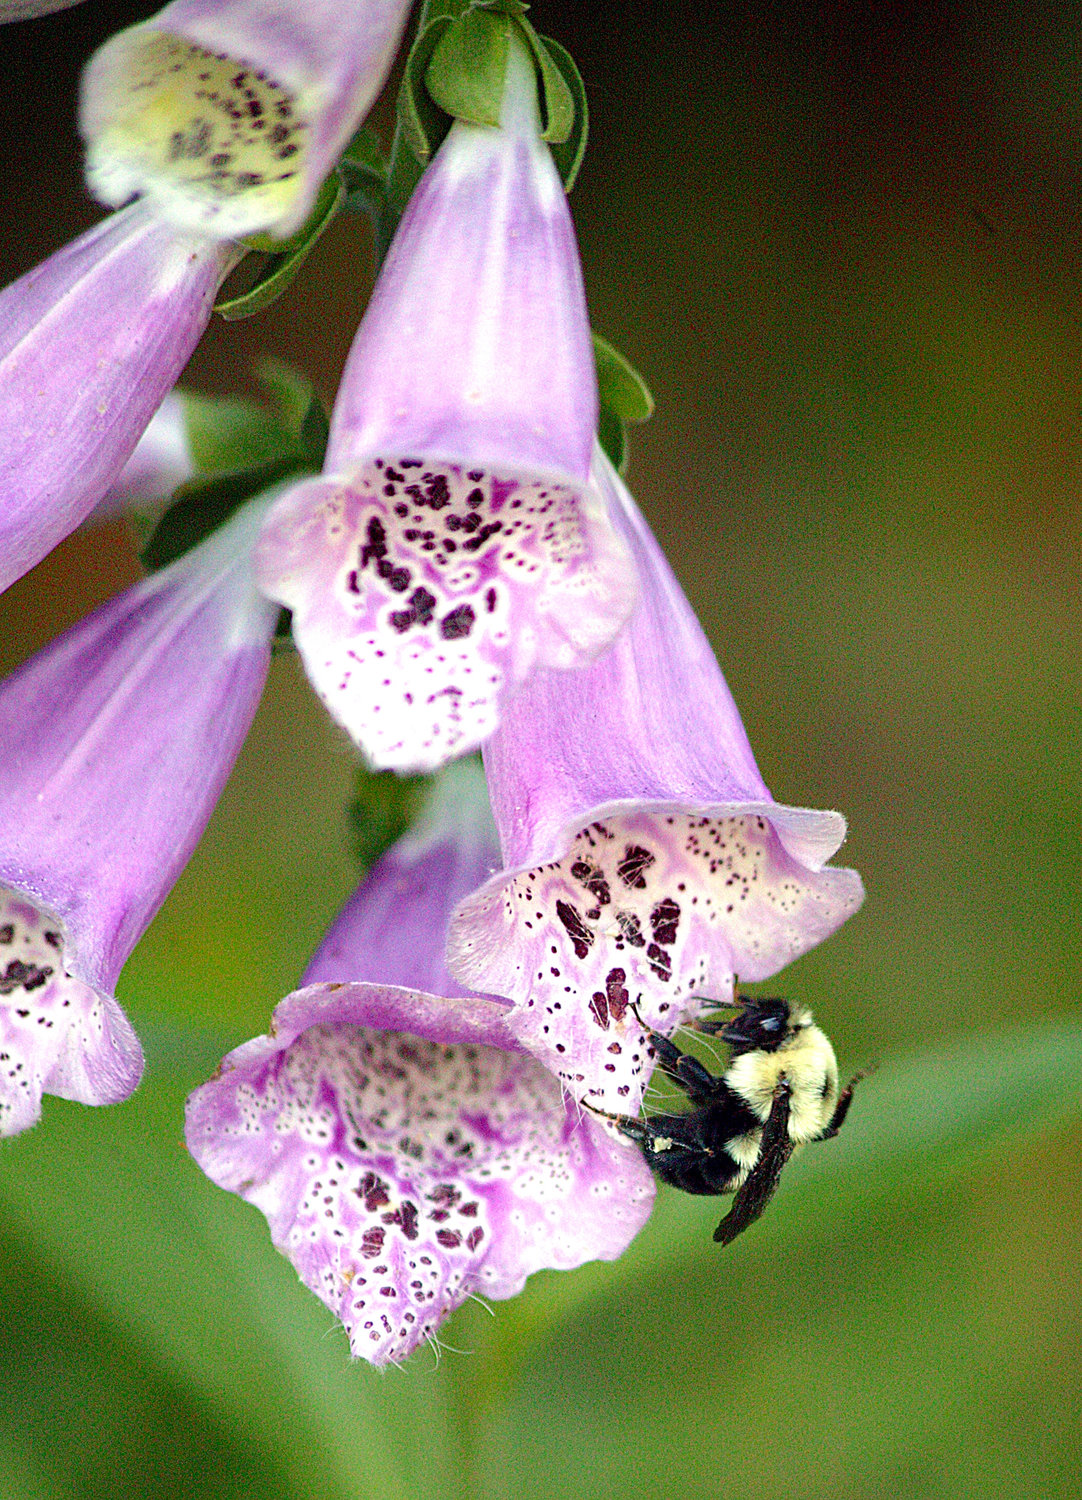 A Bumble Bee seeks nectar in the flower of a Foxglove plant (Digitalis Purpurea) in Tyler, Texas.